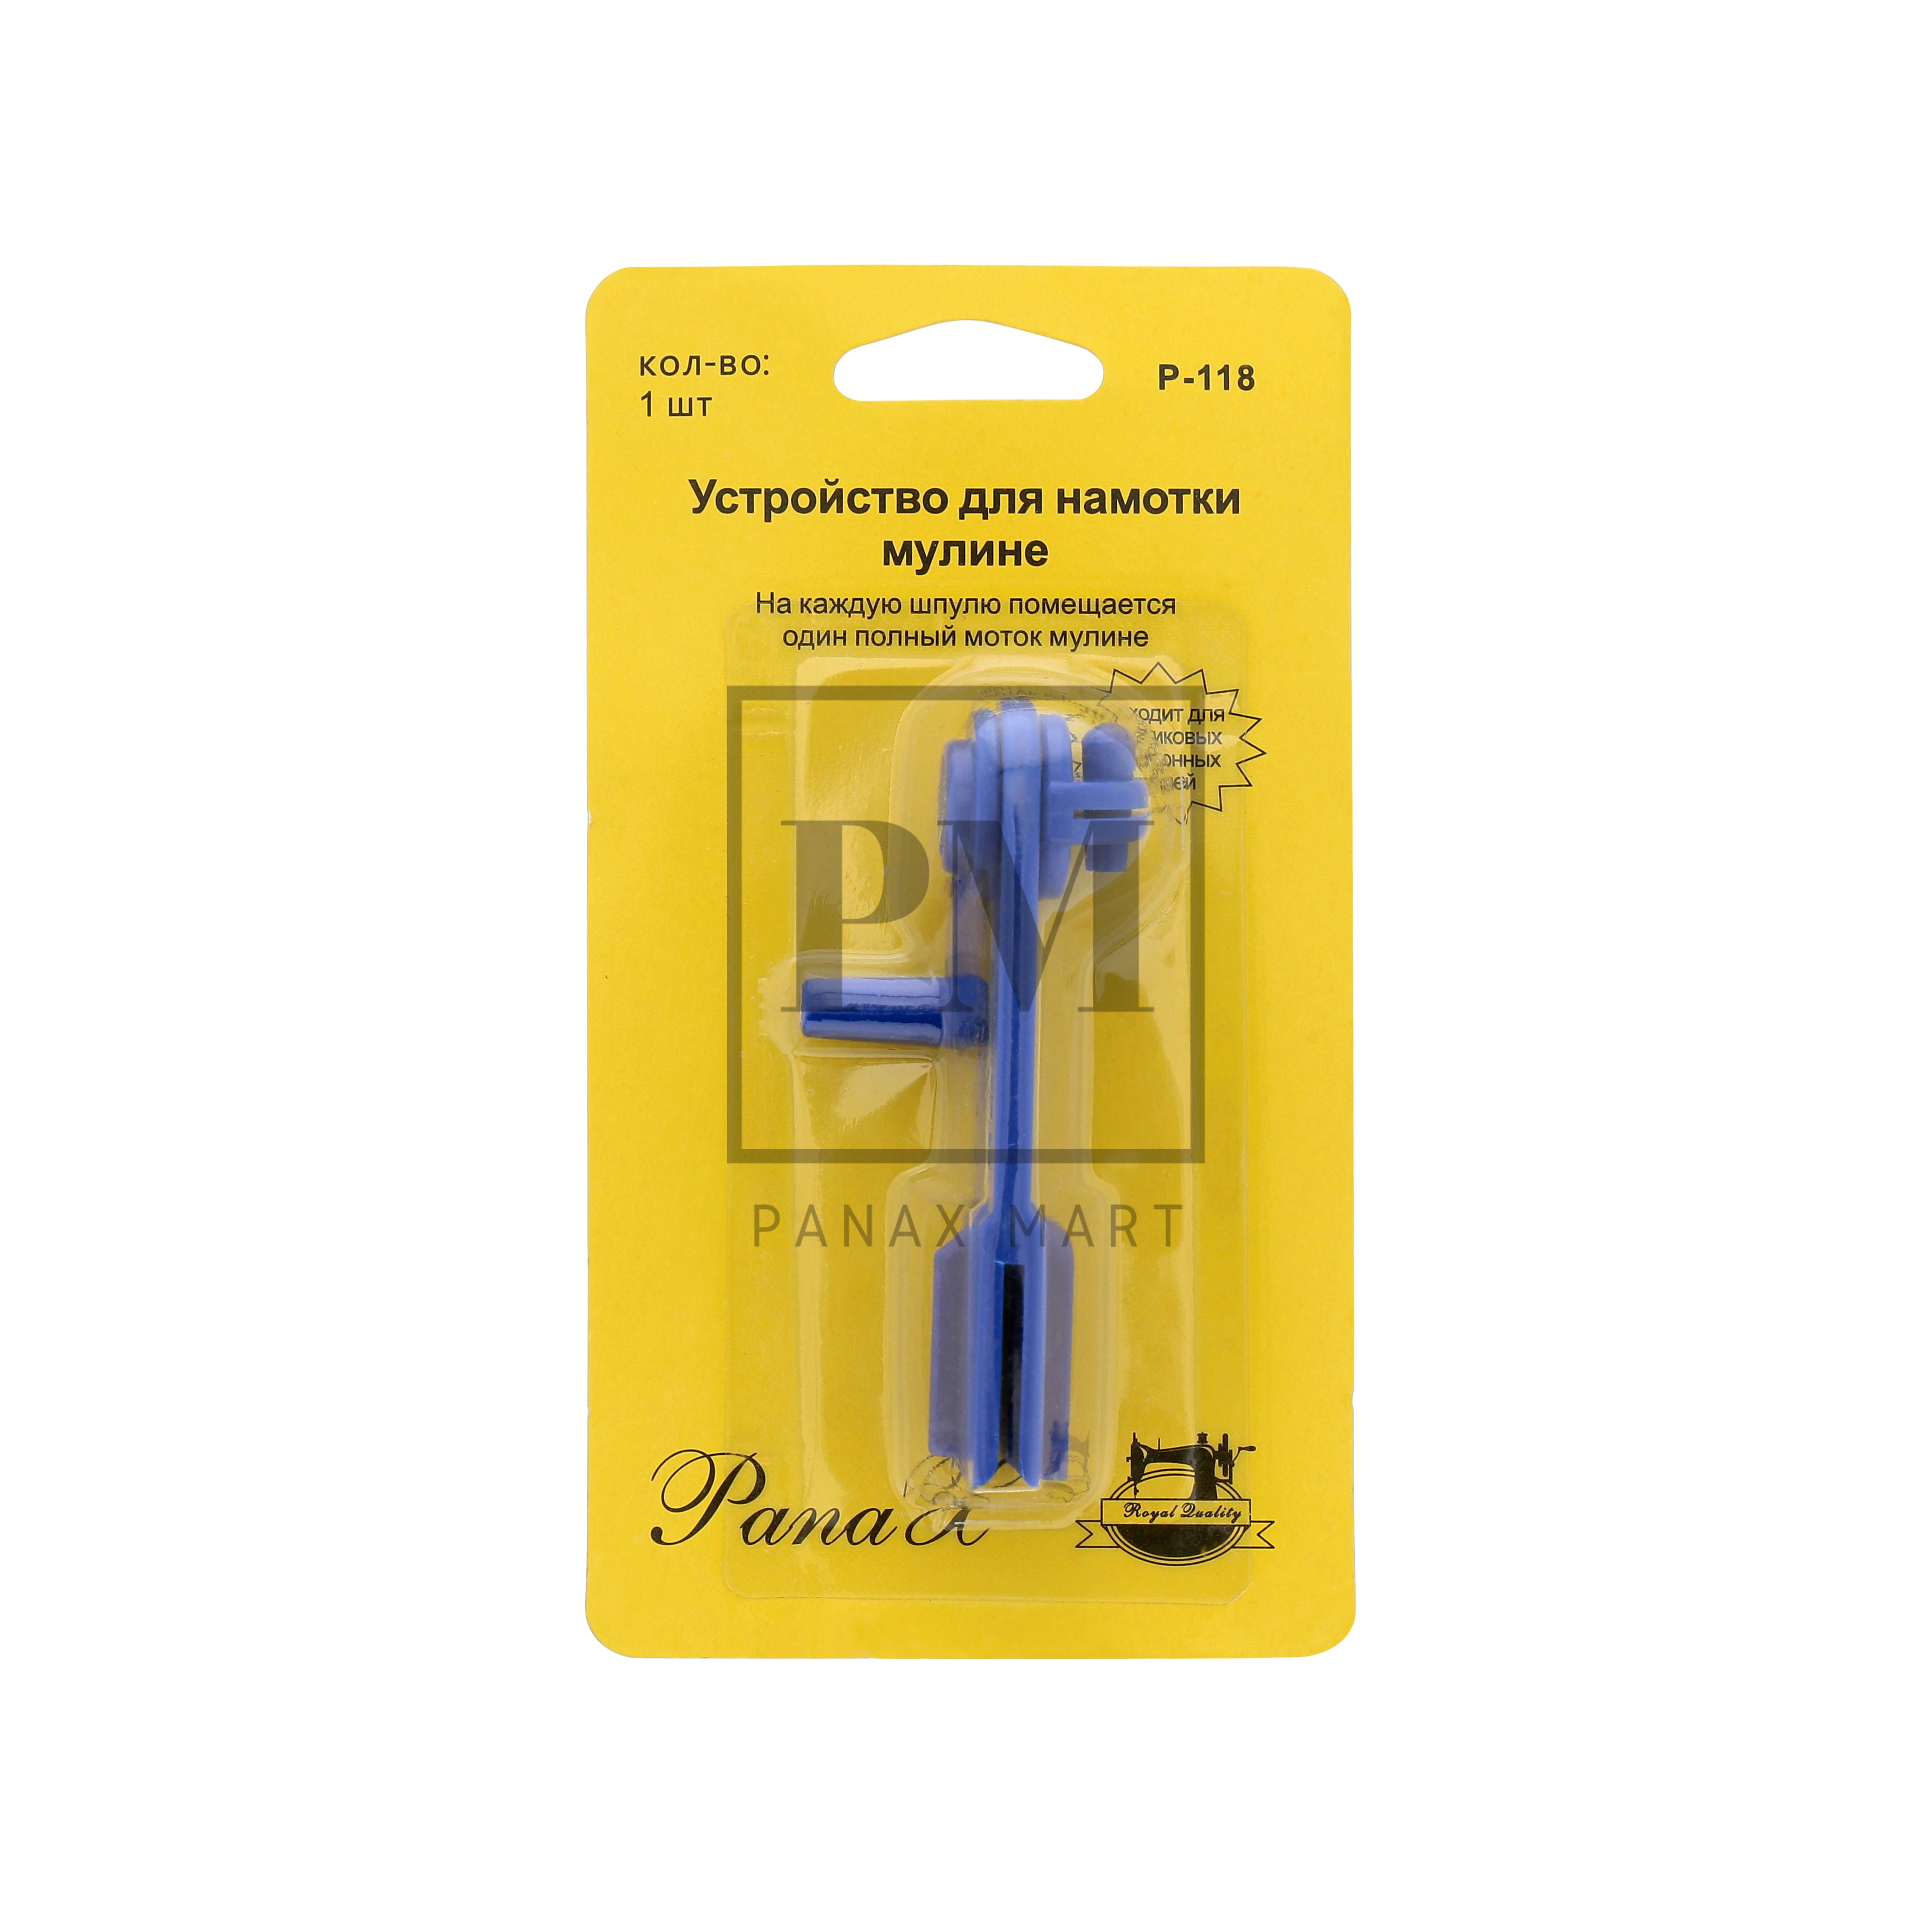 Panax Hand Operated Thread/Floss Winder - Panax Mart